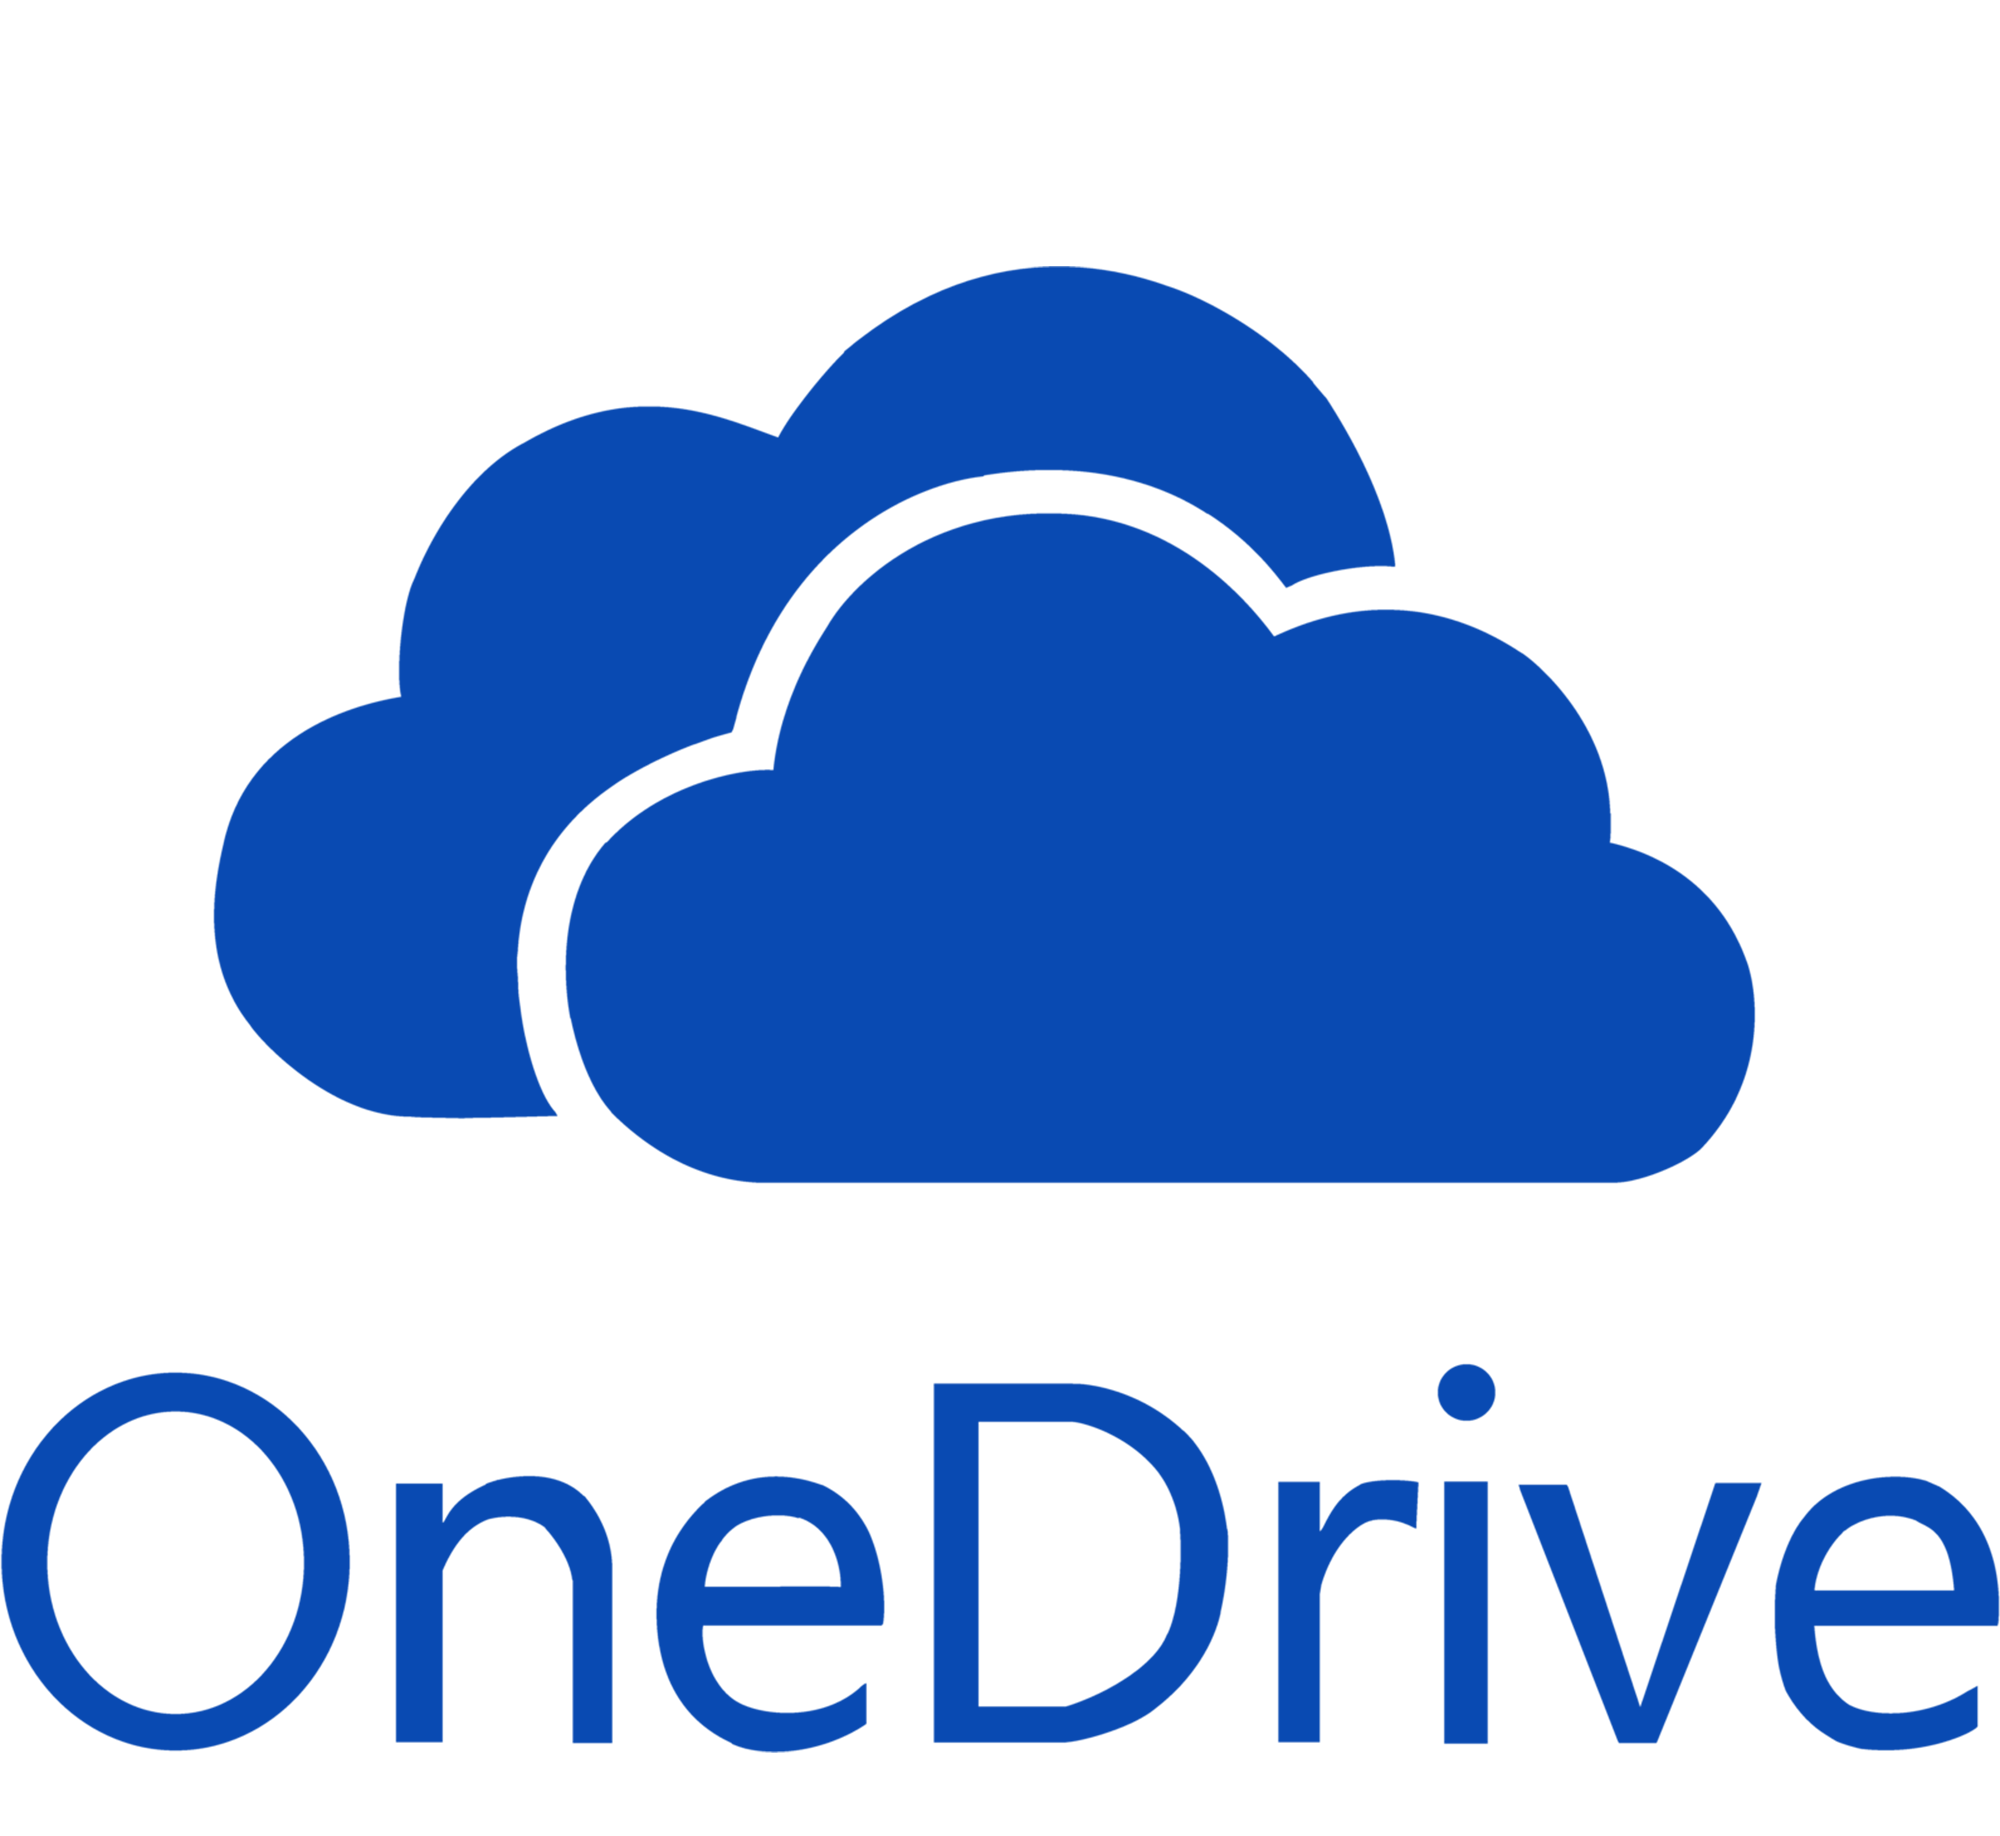 cloud onedrive download